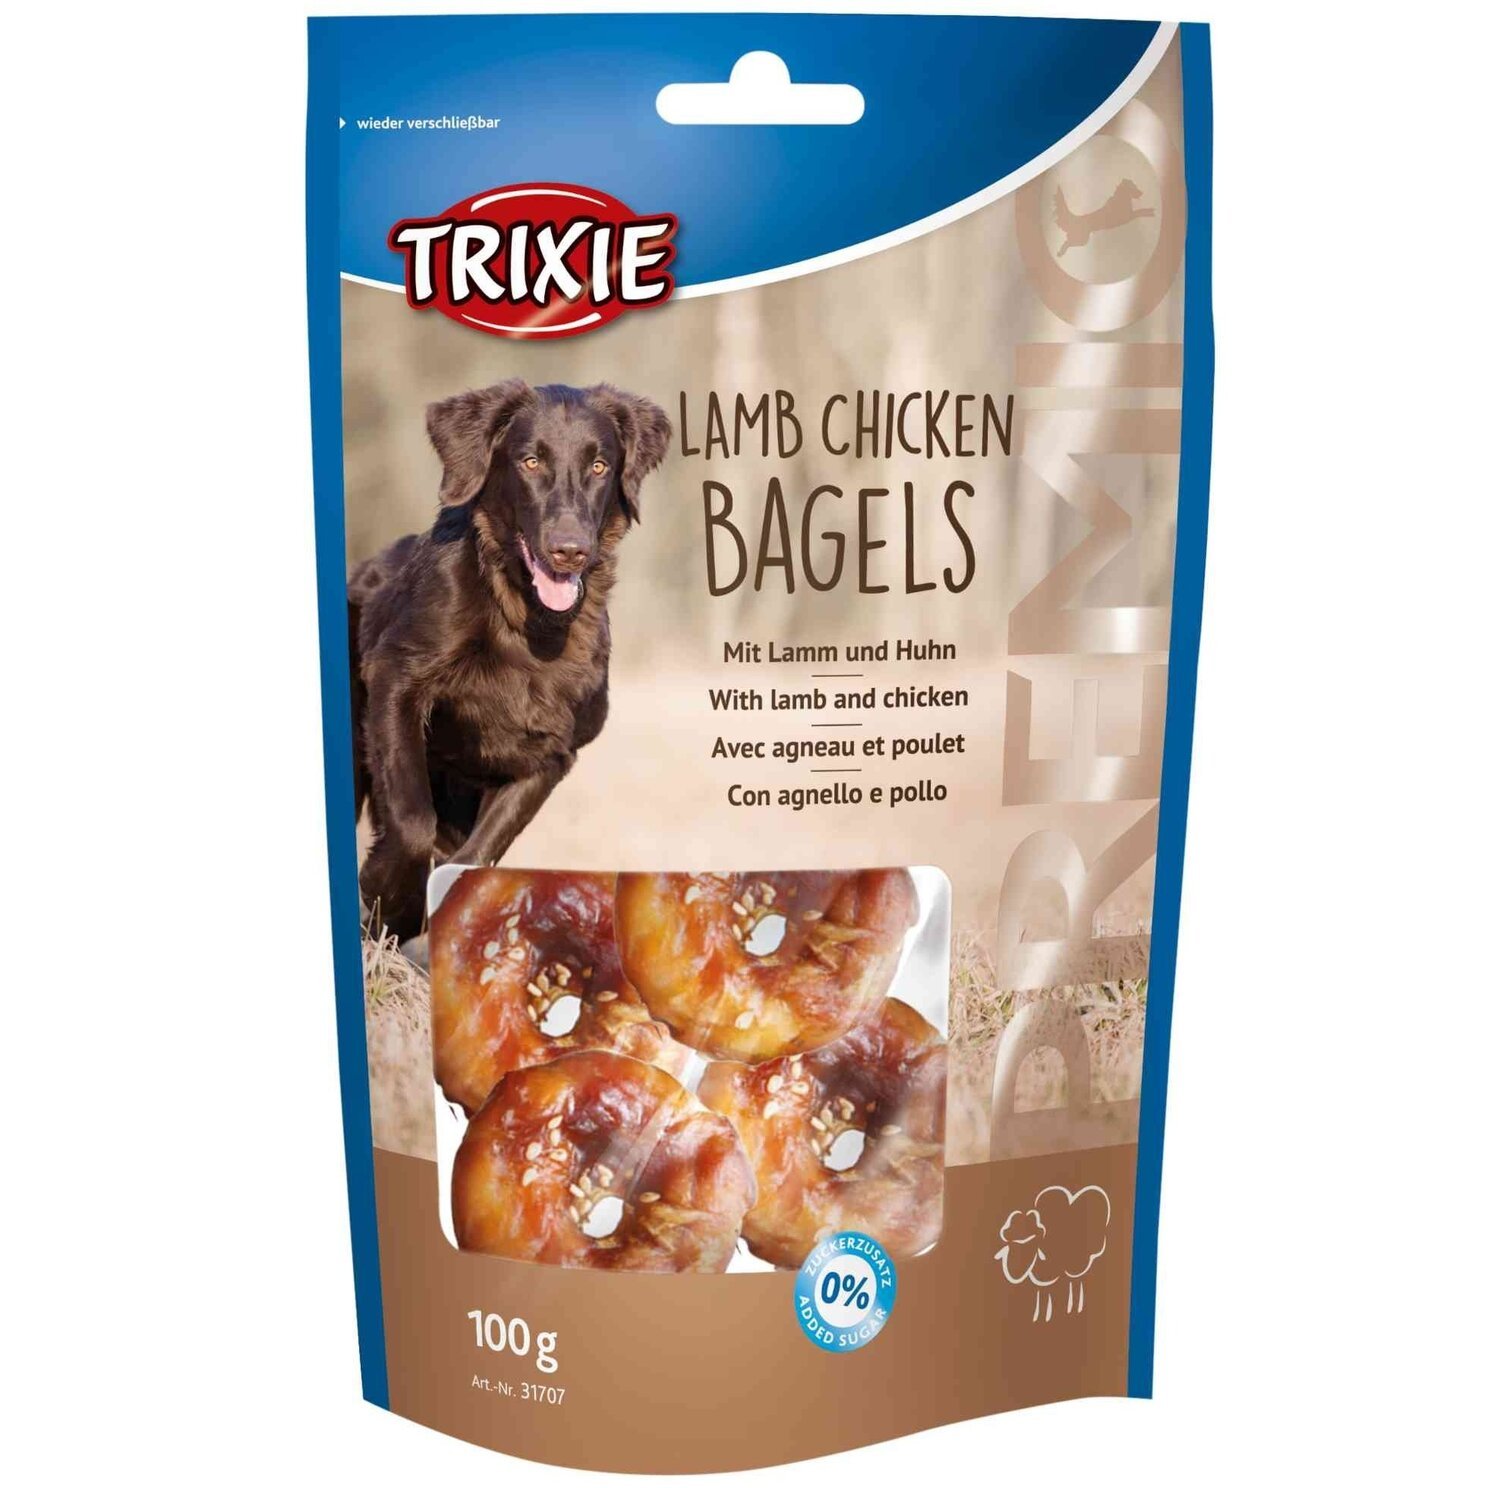 Лакомство для собак Trixie PREMIO Lamb Chicken Bagles кольца ягненок/курица 100гр фото 